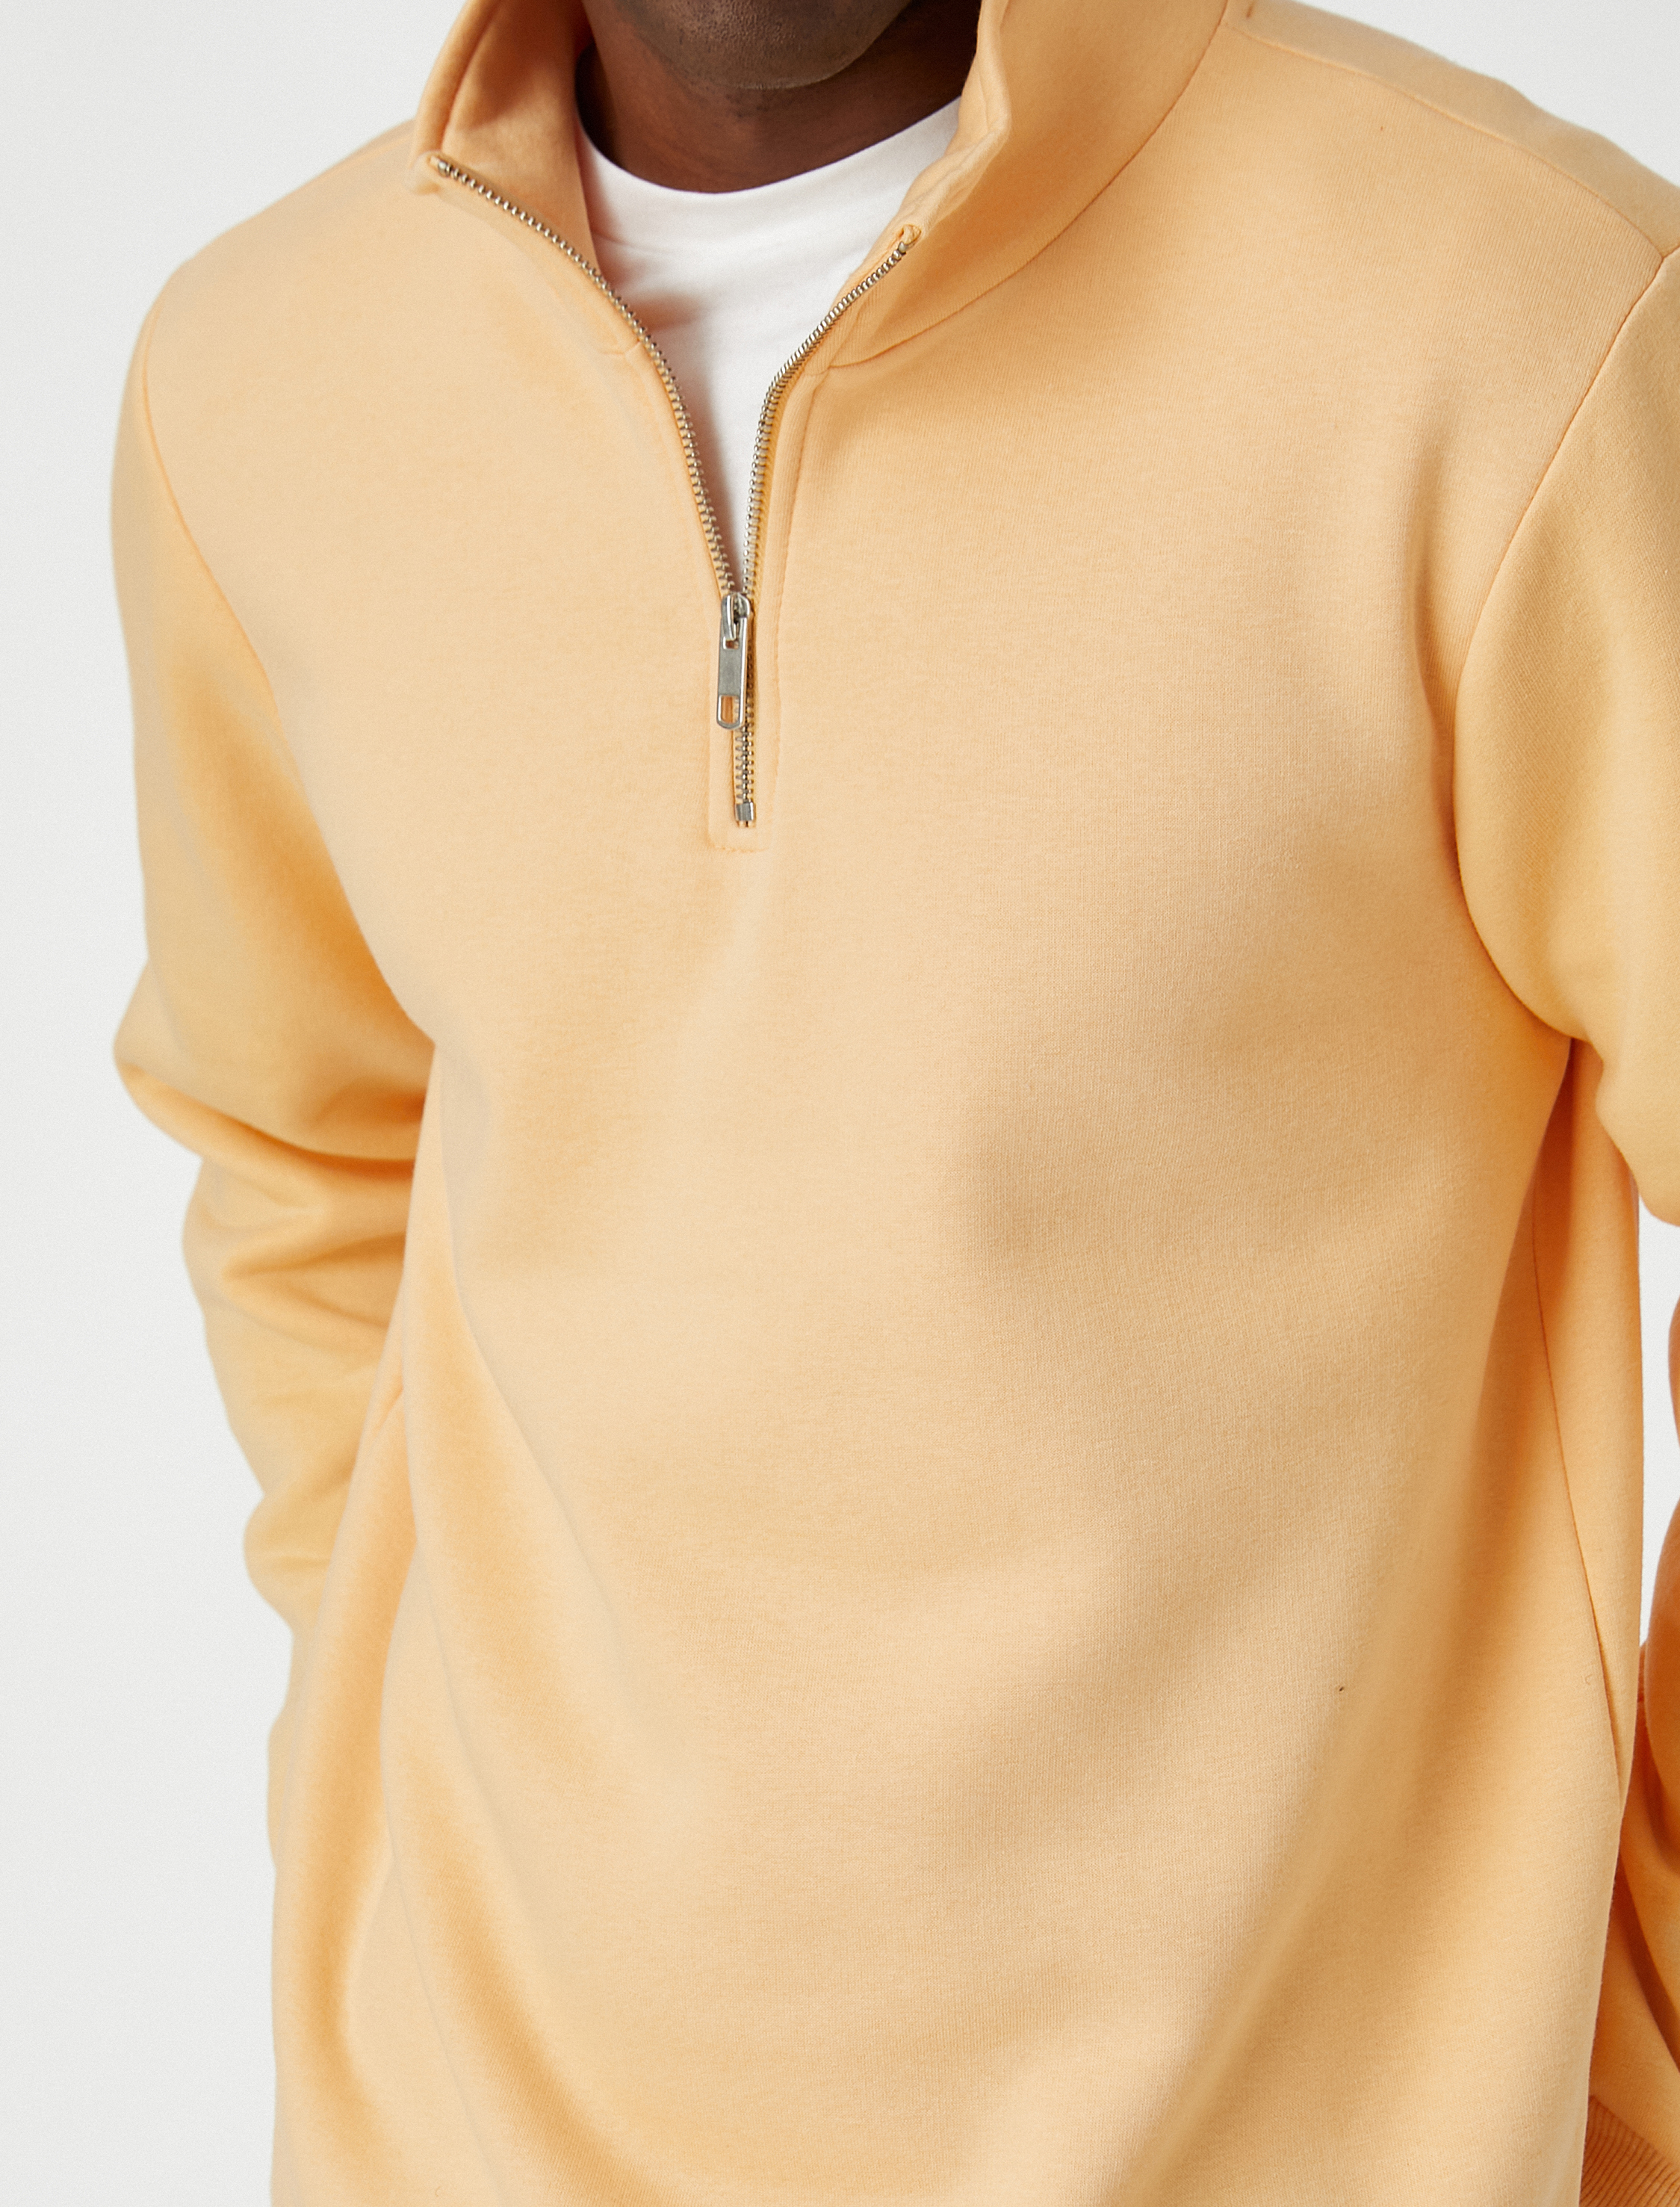 KIDS FASHION Jumpers & Sweatshirts Zip discount 73% Gray/Navy Blue 1-3M Ralph Lauren sweatshirt 